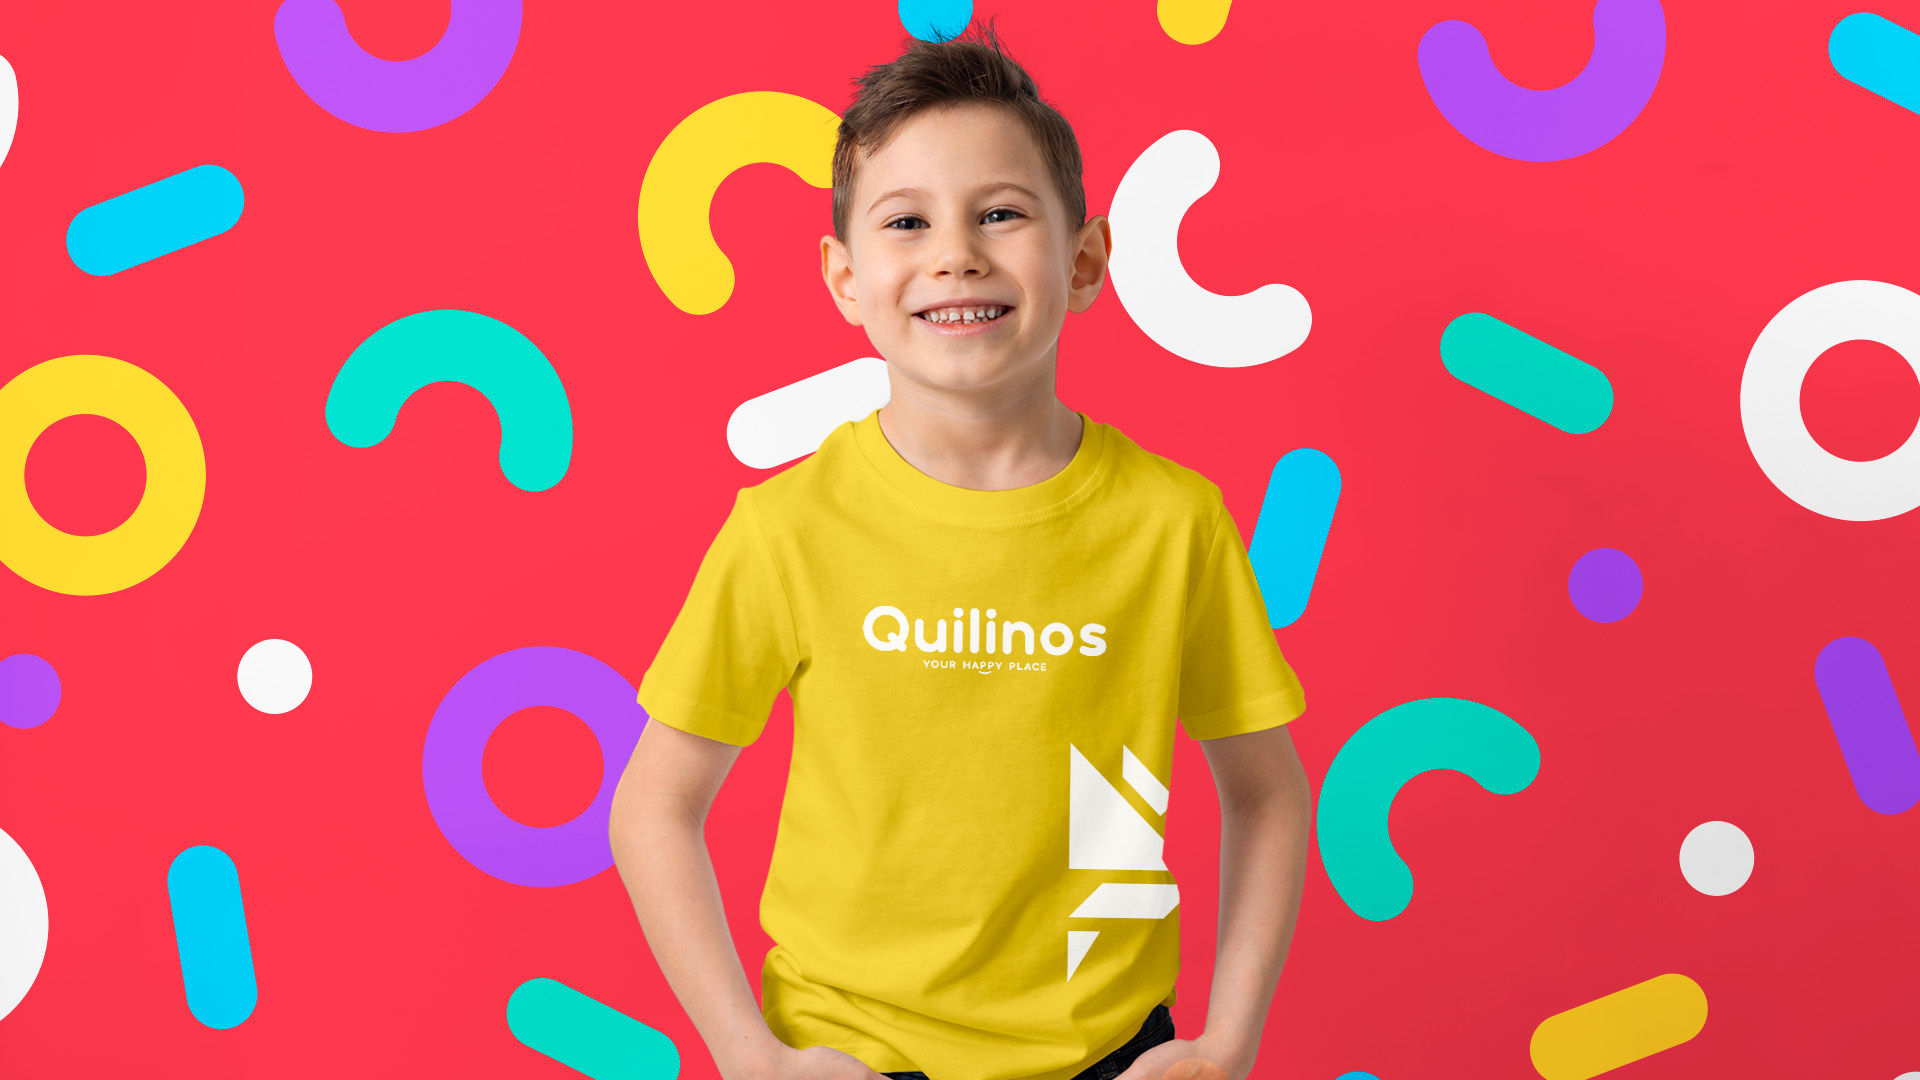 quilinos-branding-kiwiids-marketing-digital-monterrey-07